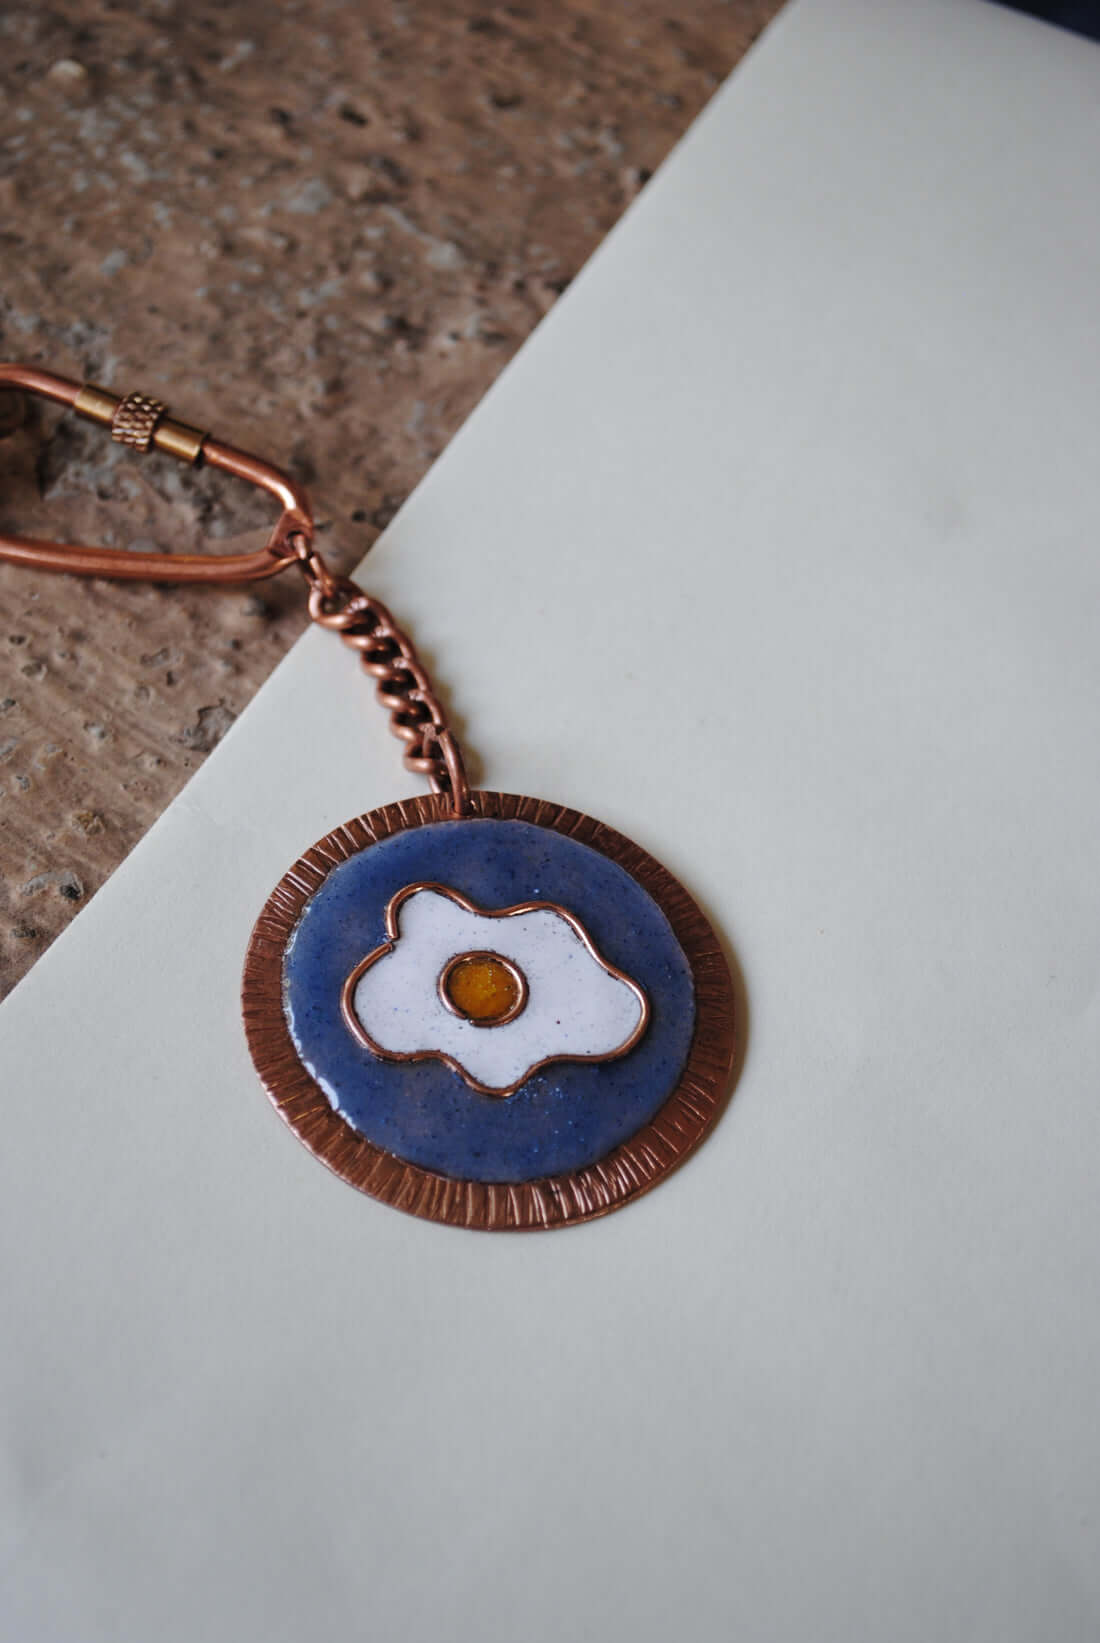 Copper enamel trinkets, keychain handcrafted in Maharashtra, India. Funky egg design